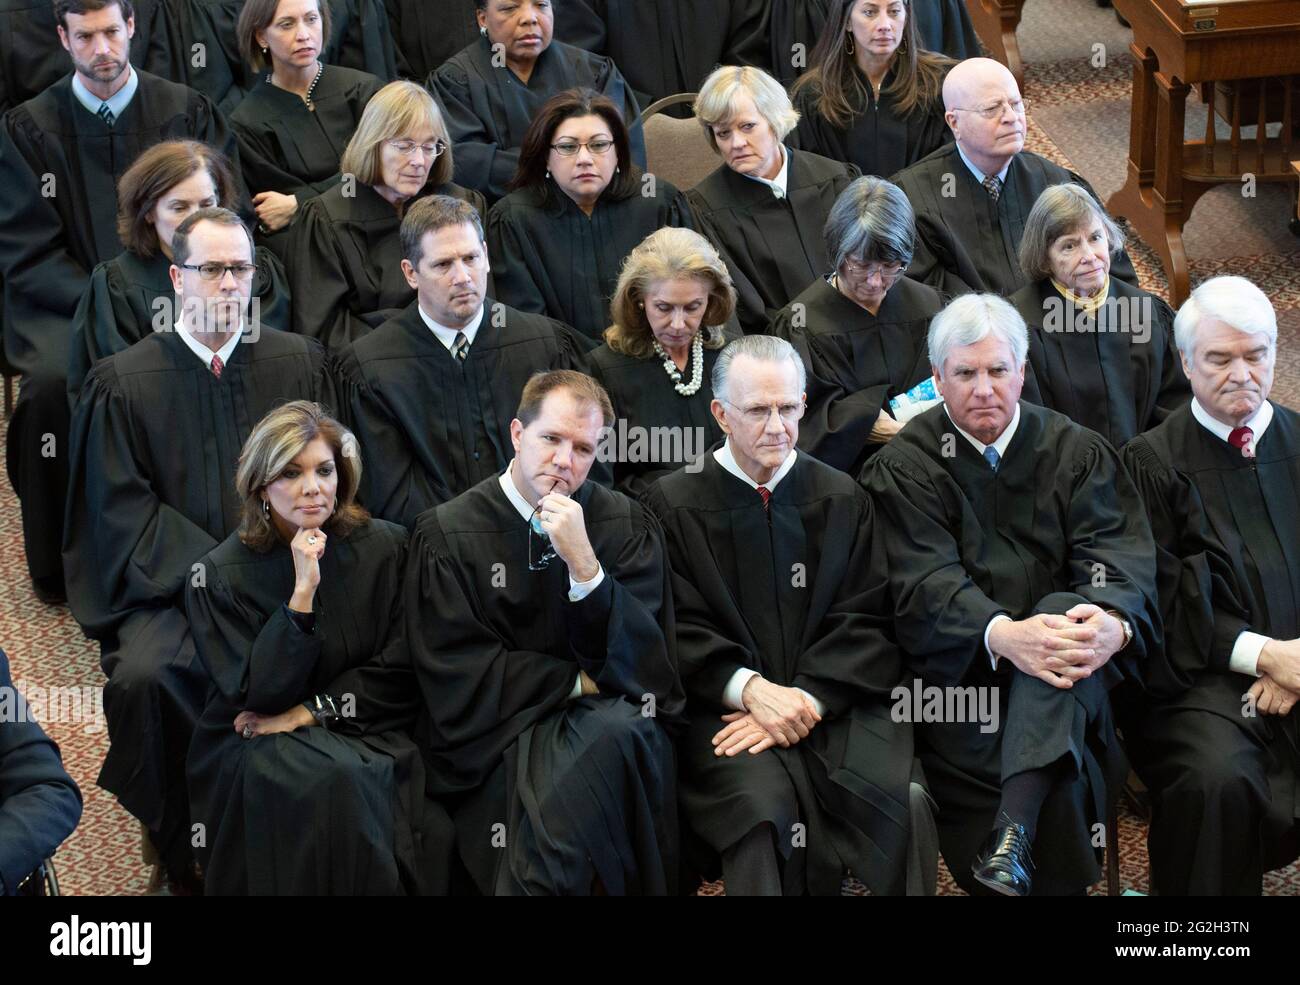 Texas Supreme Court Justice Eva Guzman (far left) is shown at the State